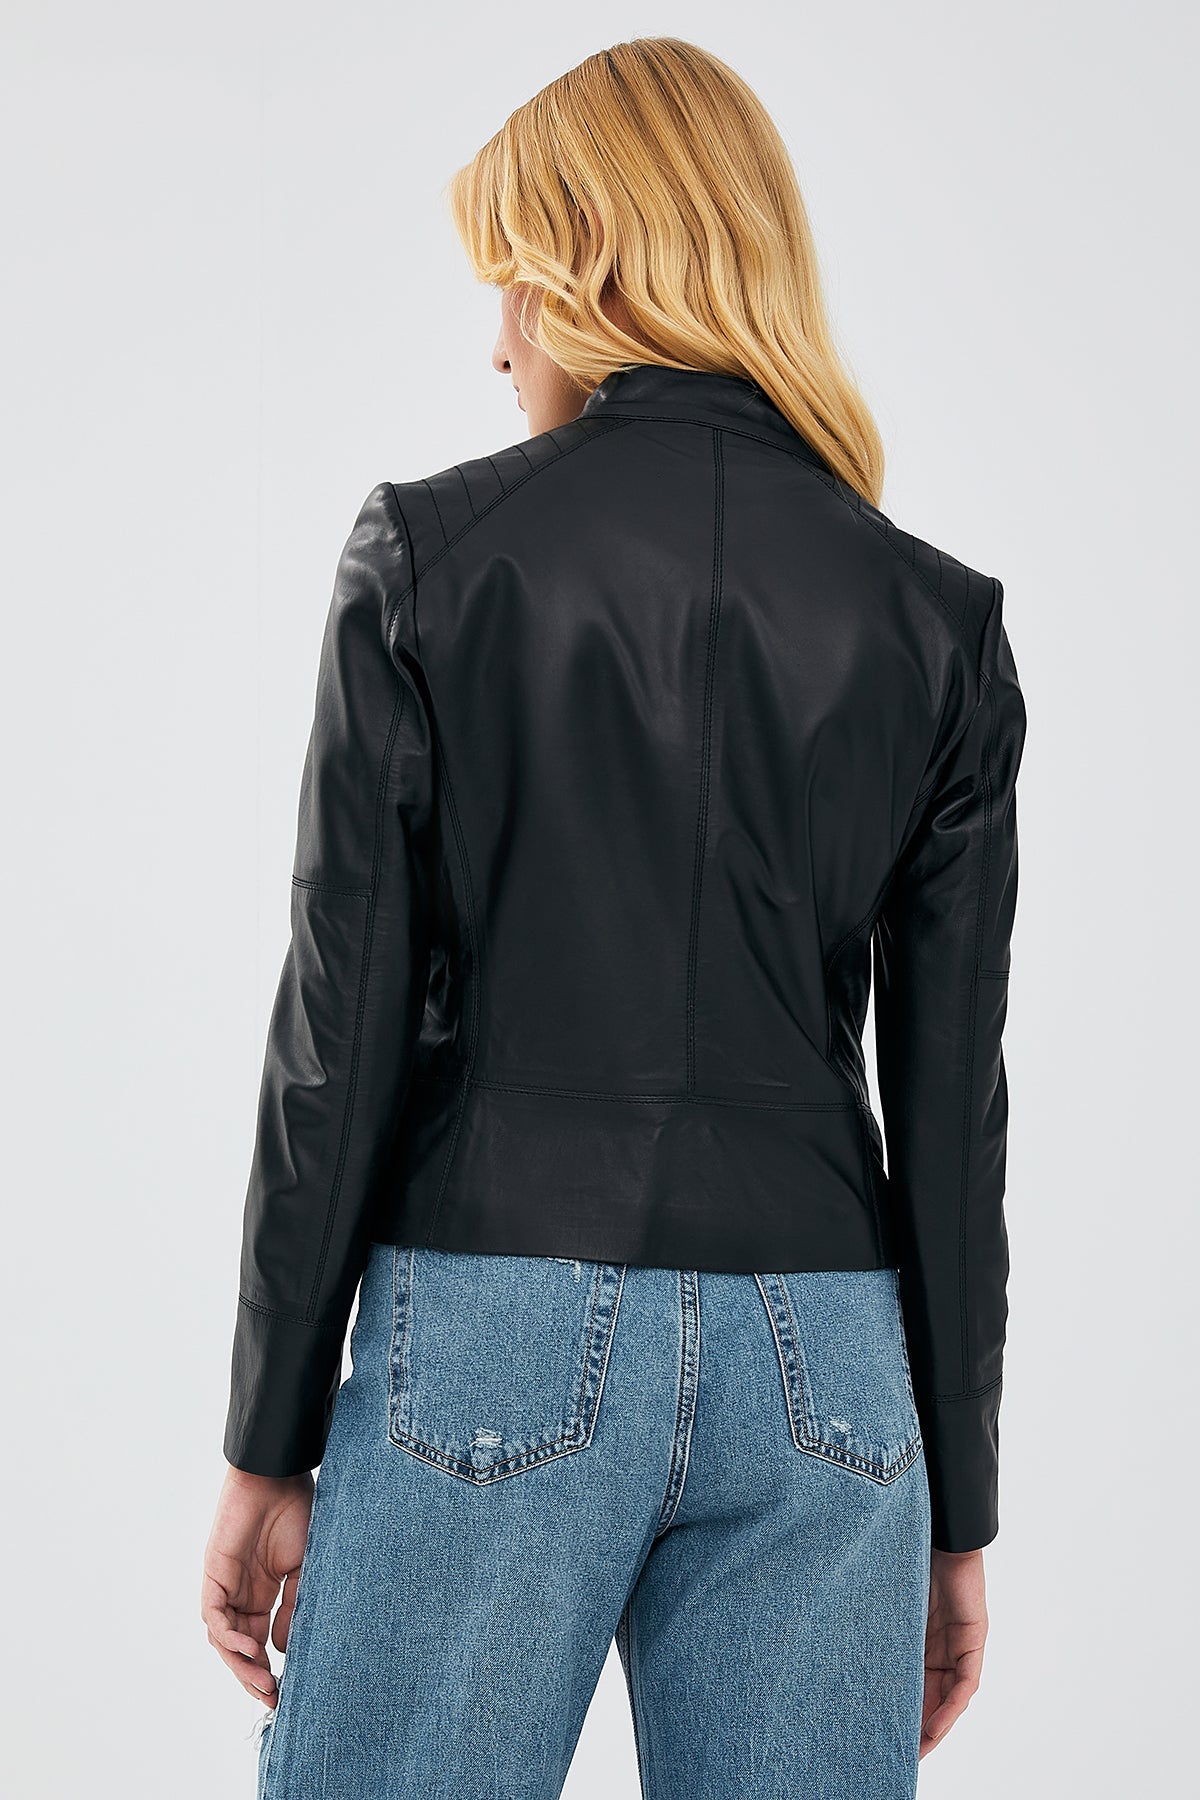 Mary Women's Leather Jacket